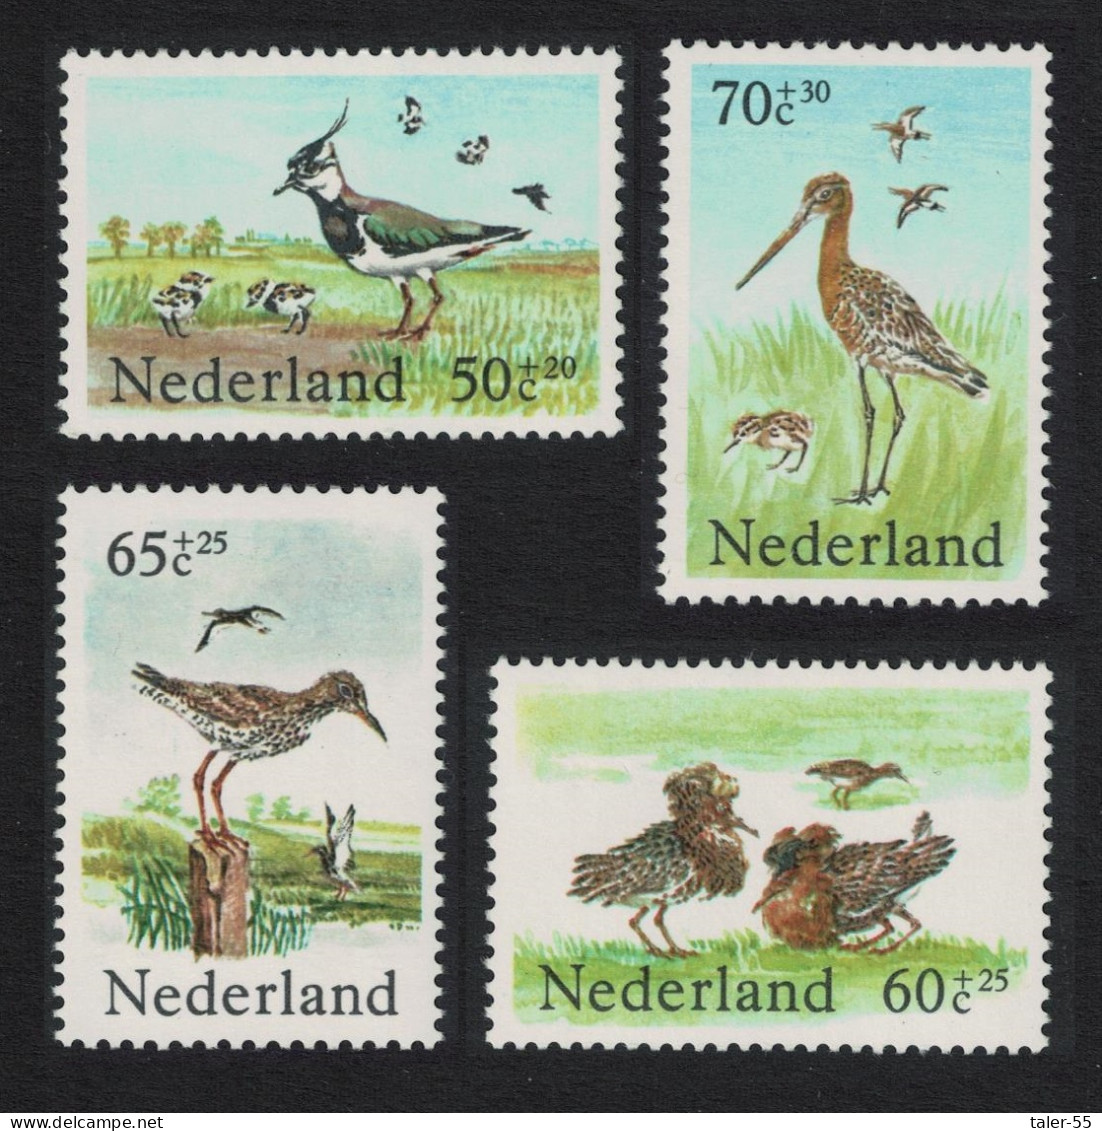 Netherlands Lapwing Redshank Ruff Godwit Pasture Birds 4v 1984 MNH SG#1435-1438 MI#1246-1249 Sc#B600-603 - Unused Stamps